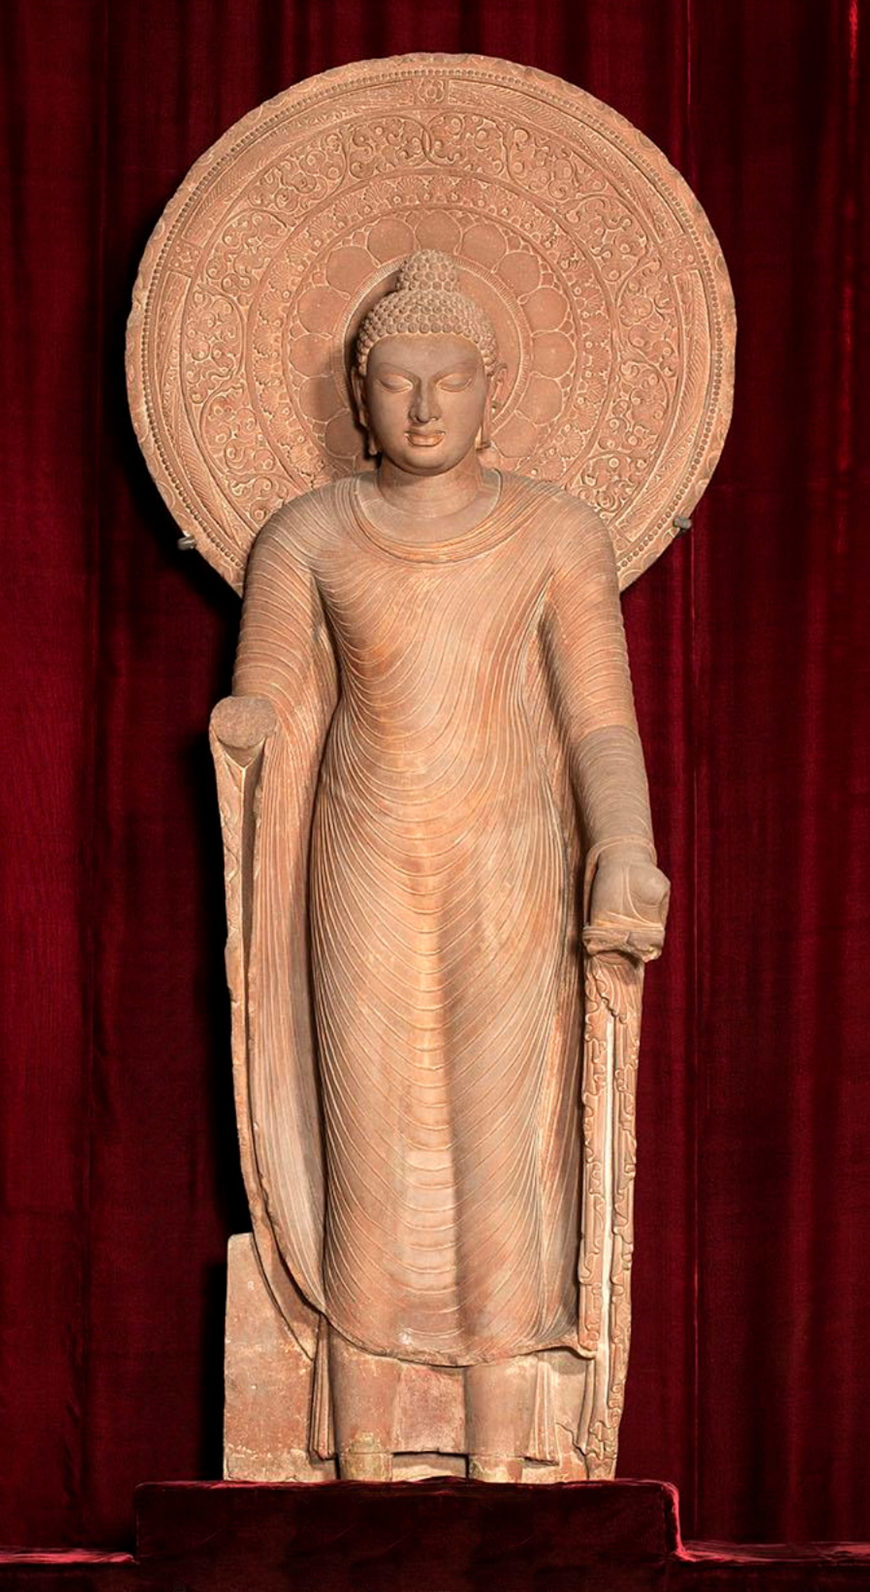 Standing Buddha, c. 5th century C.E., Gupta period (©2017 The Presidents Secretariat, Rashtrapati Bhavan)